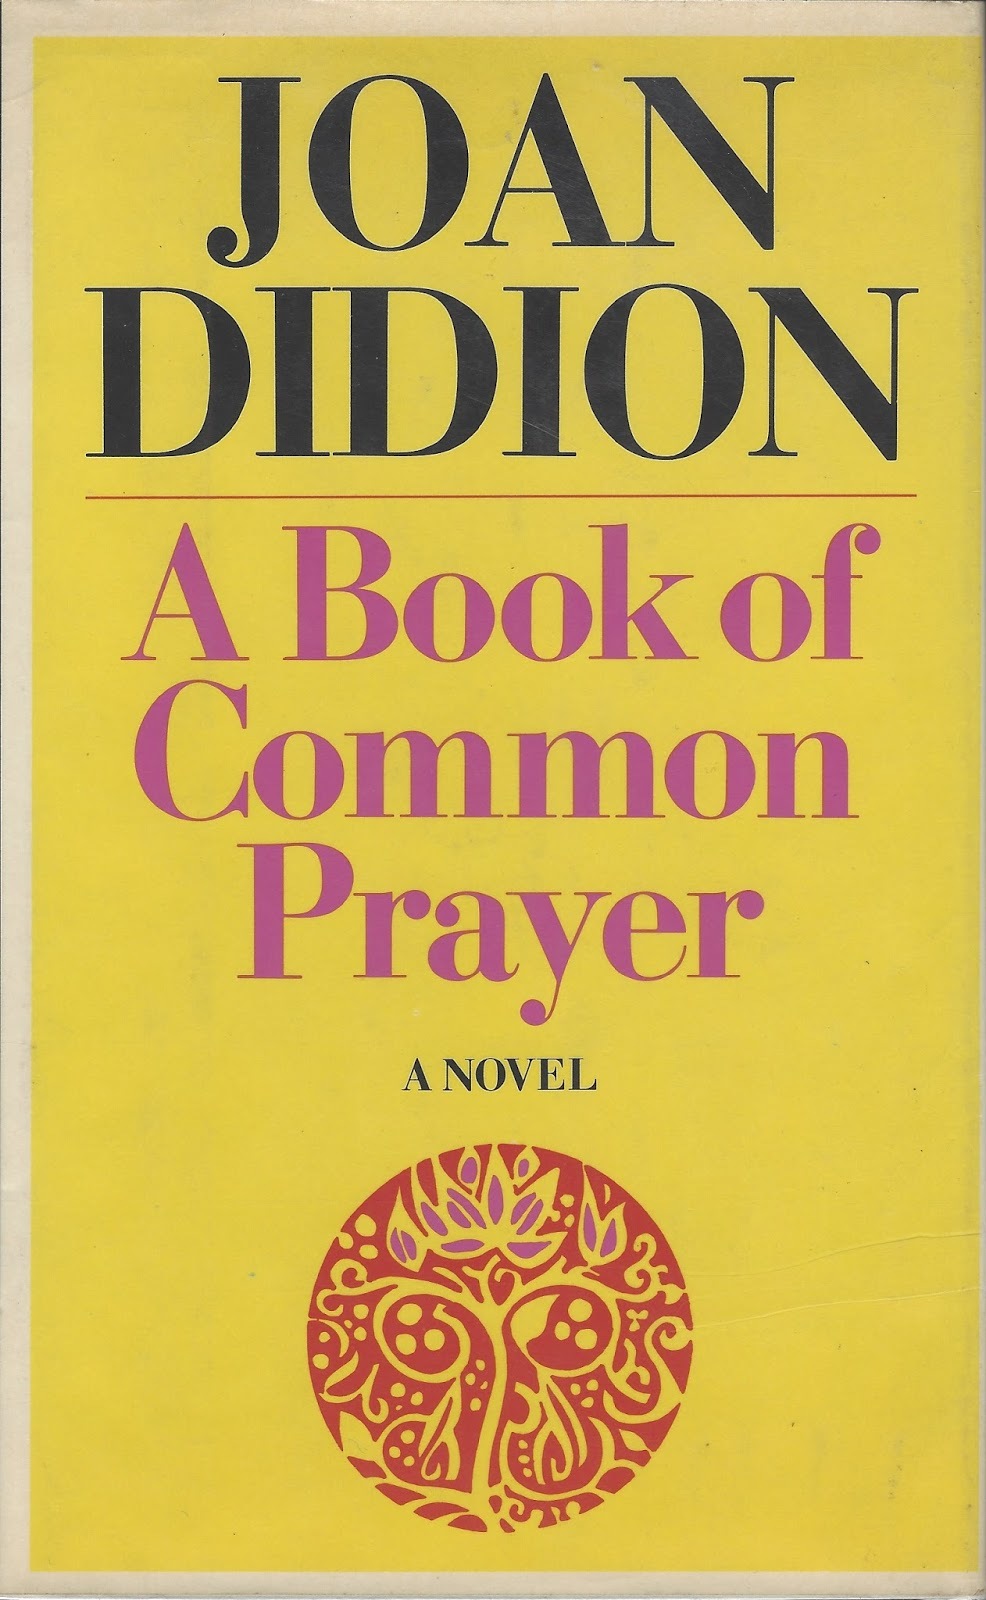 33 Joan Didion Book Covers, Ranked ‹ Literary Hub